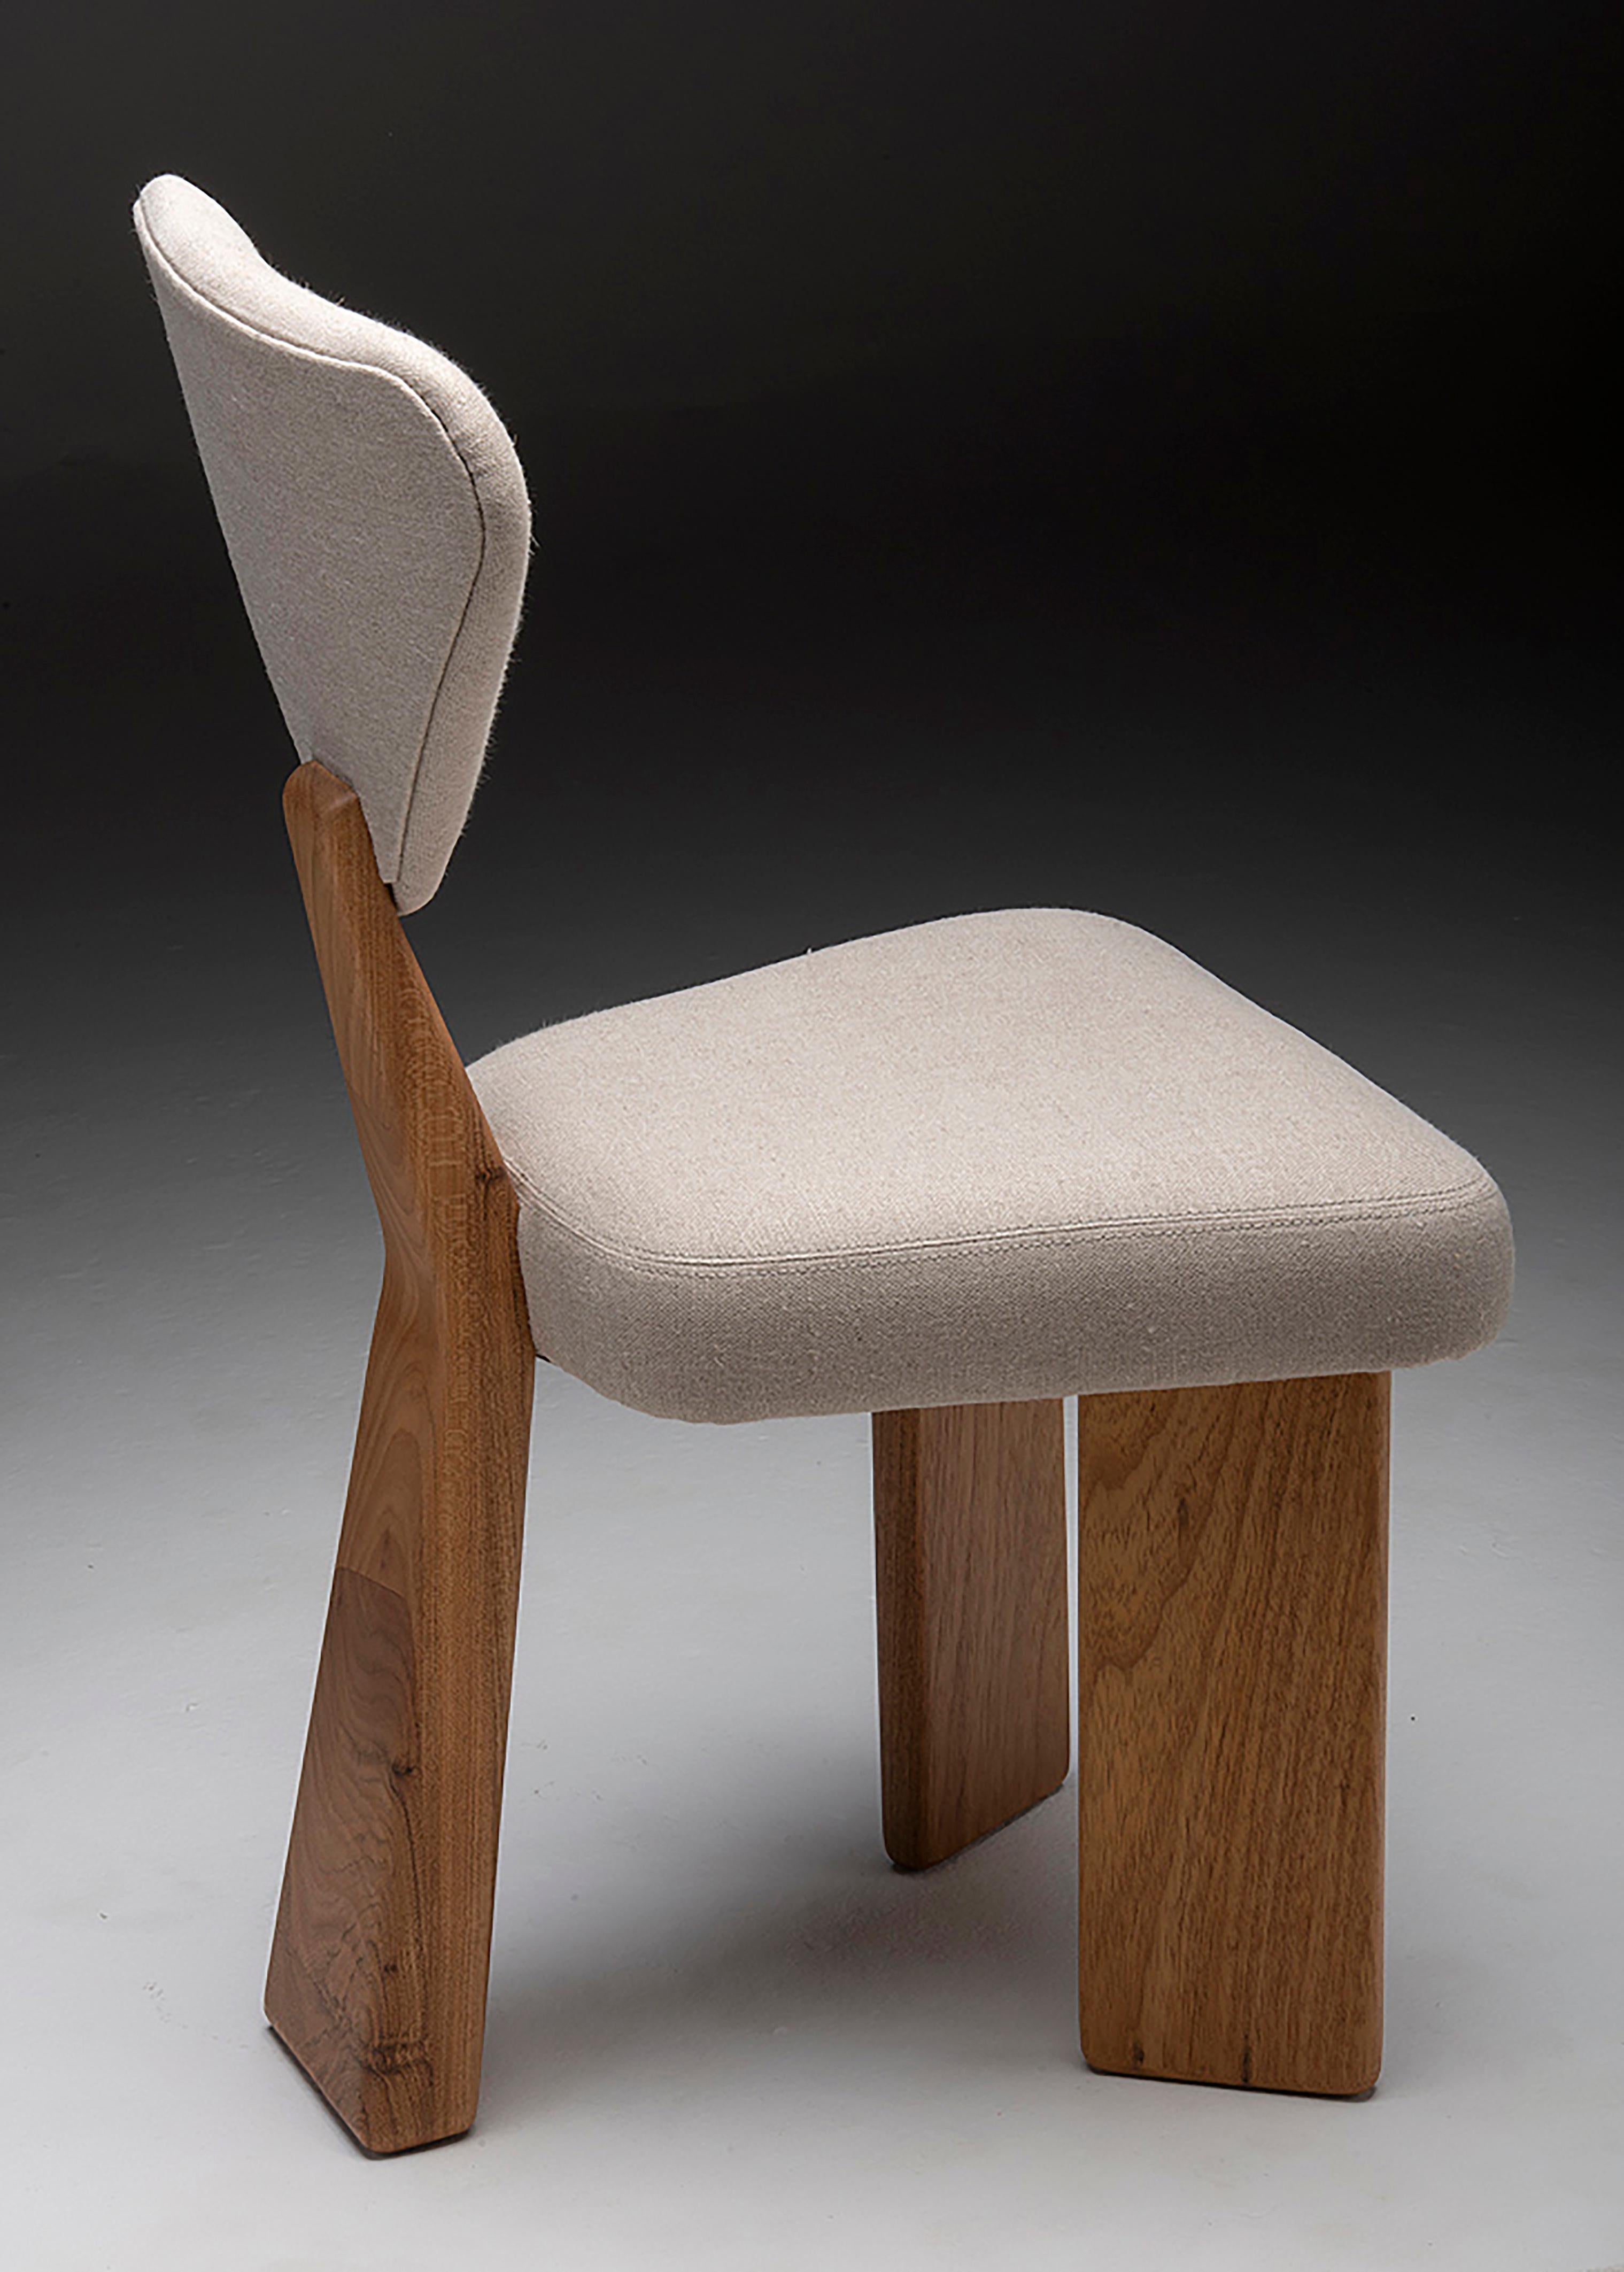 A set of  Giraffe Chair in Solid Brazilian Walnut Wood by Juliana Vasconcellos 10